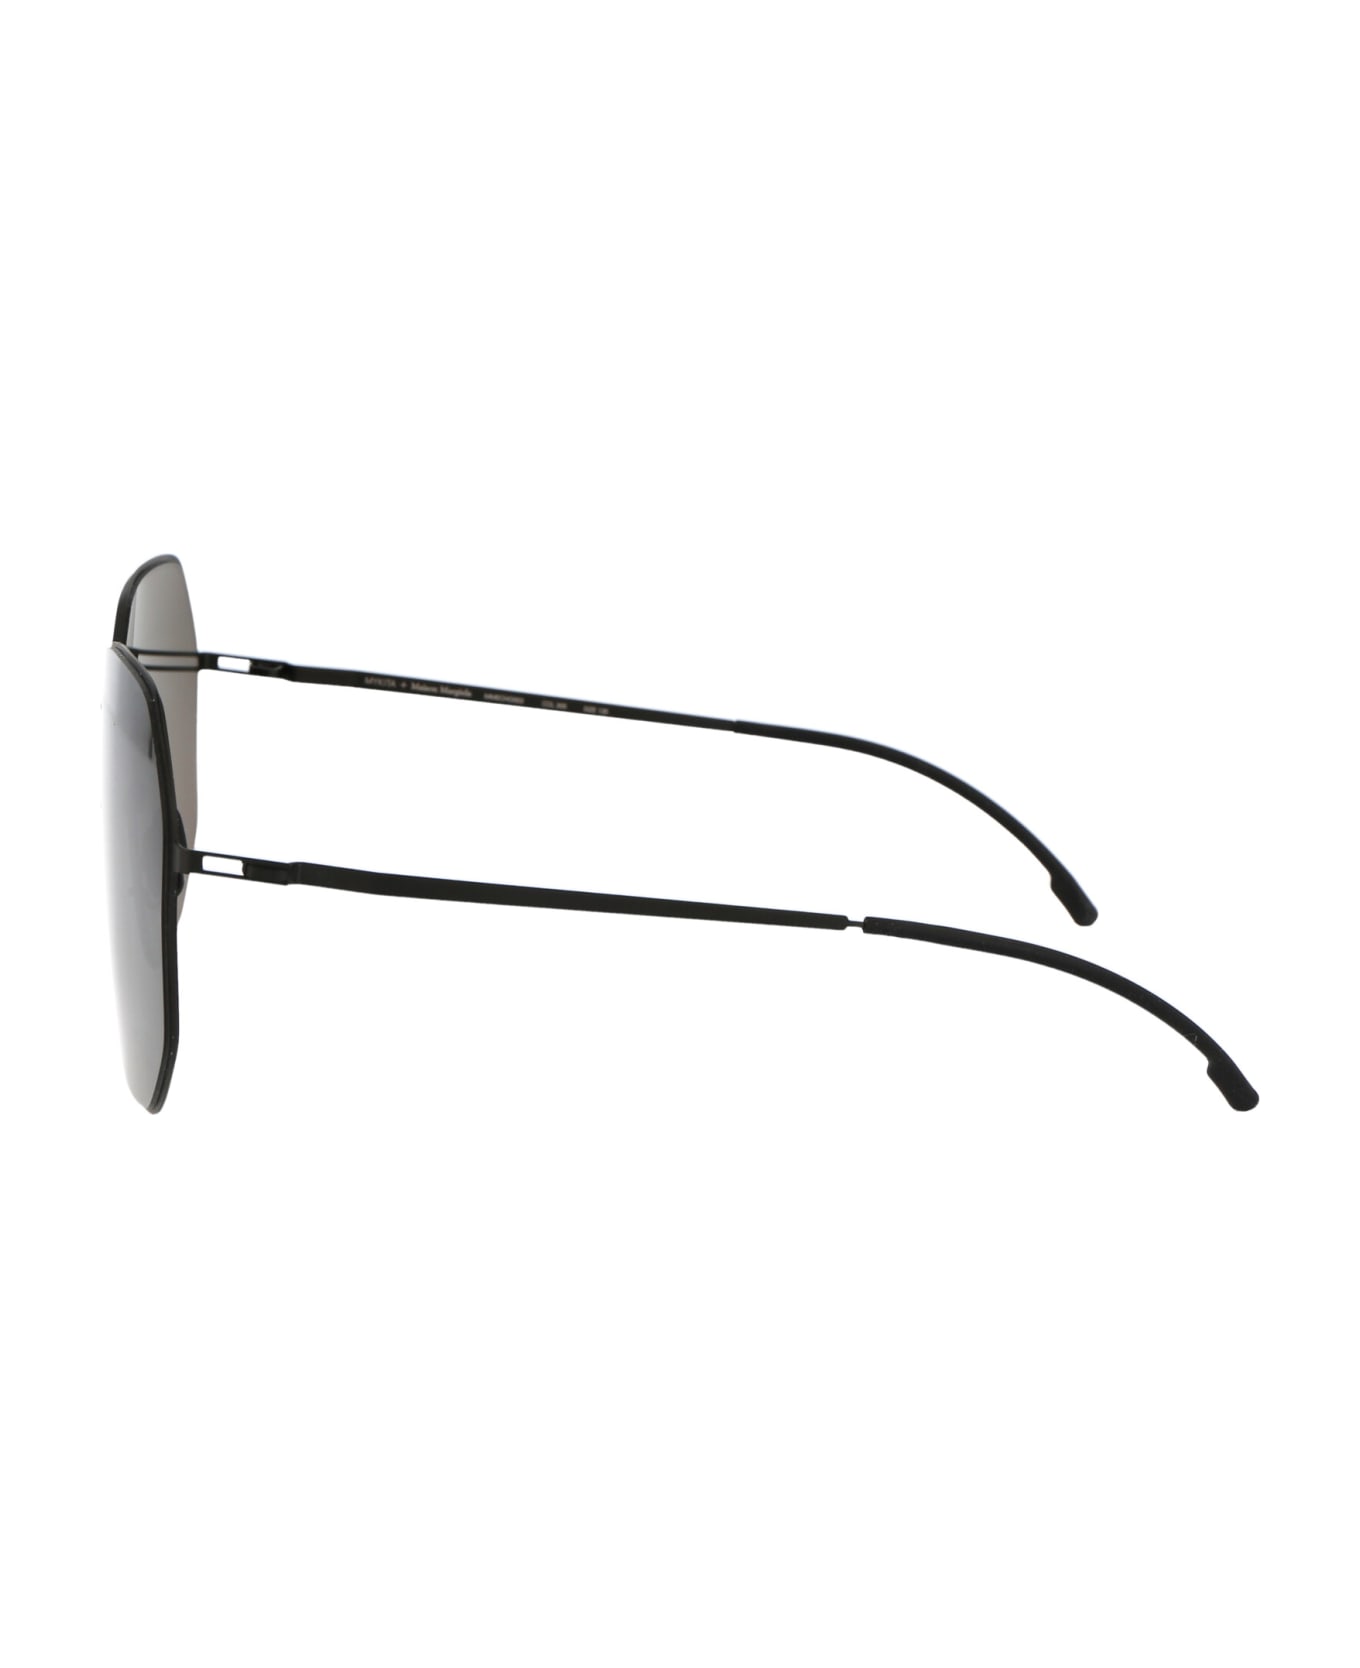 Mykita Mmecho003 Sunglasses - 305 MH6 Pitch Black Black Dark Grey Solid Shield